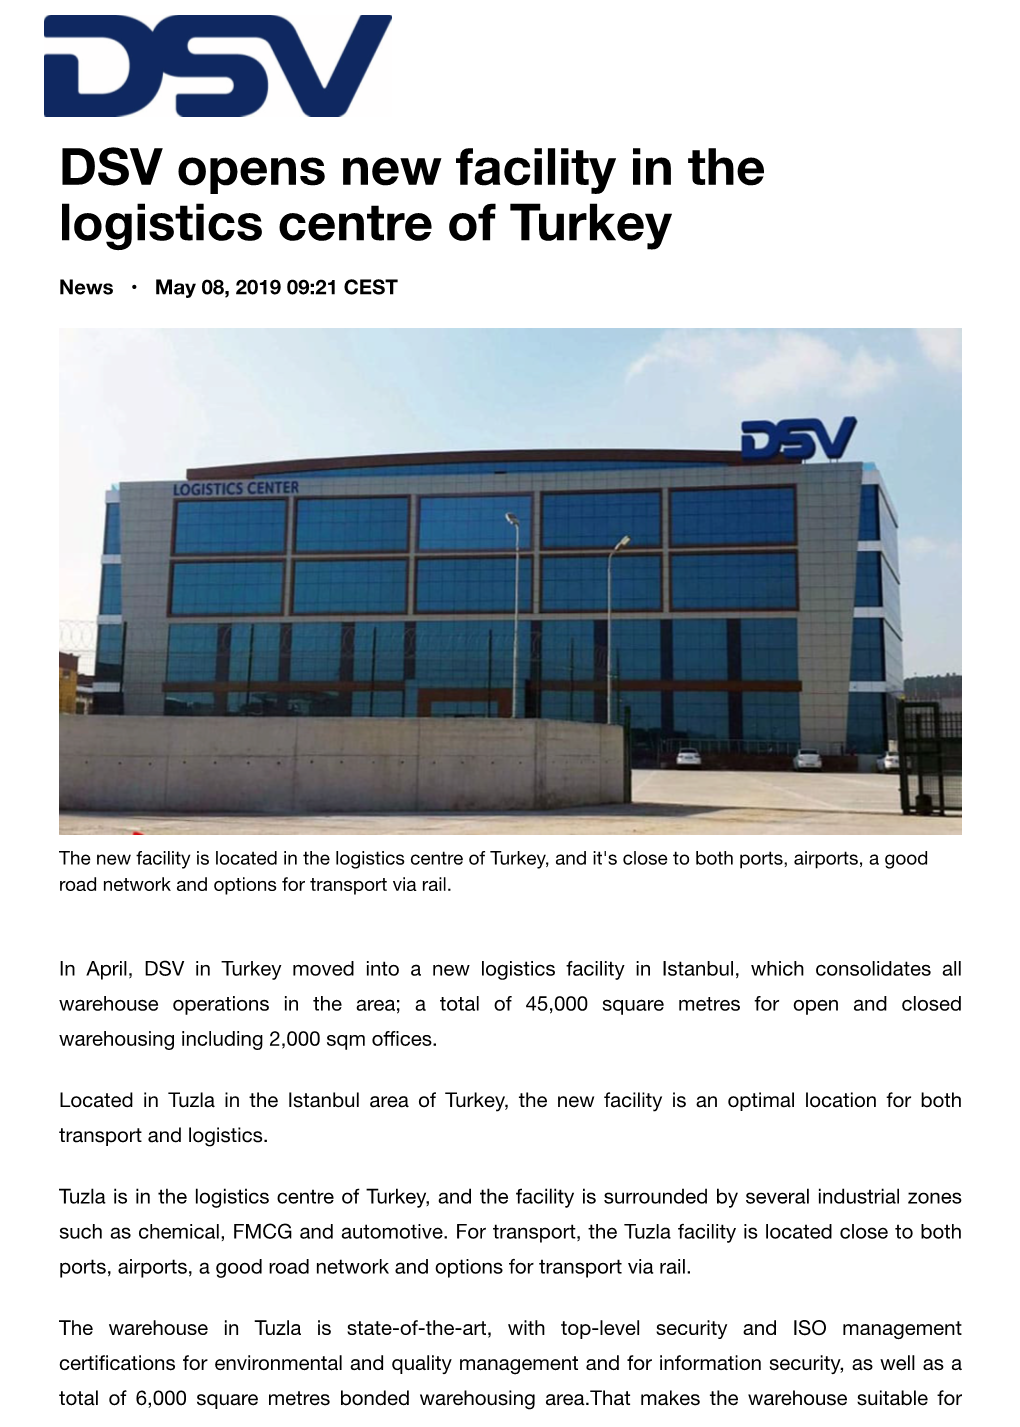 DSV Opens New Facility in the Logistics Centre of Turkey